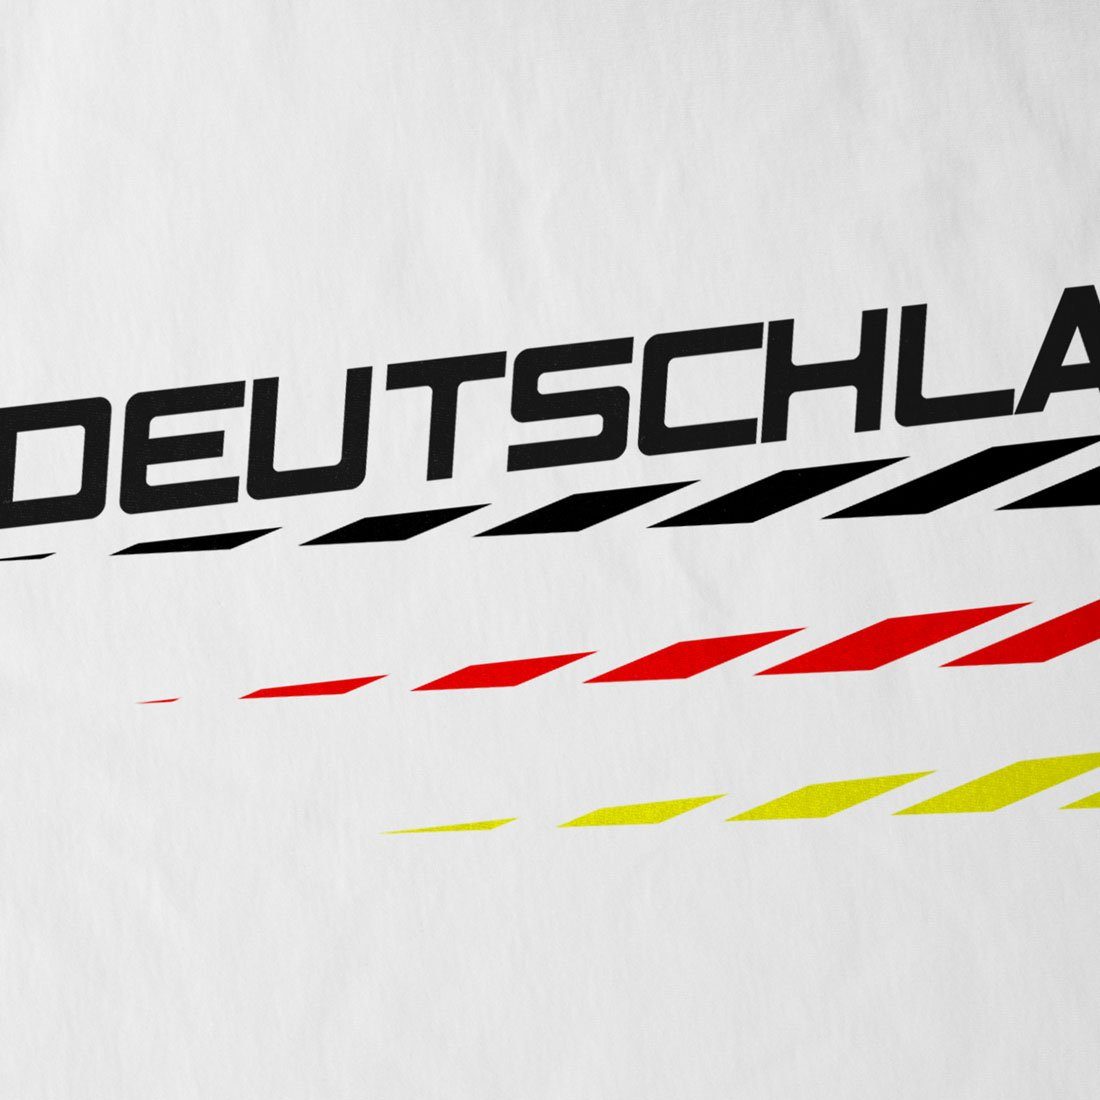 Trikot T-Shirt Deutschland Fussball weiß Herren EM Print-Shirt Katar style3 Weltmeisterschaft WM Germany 2022